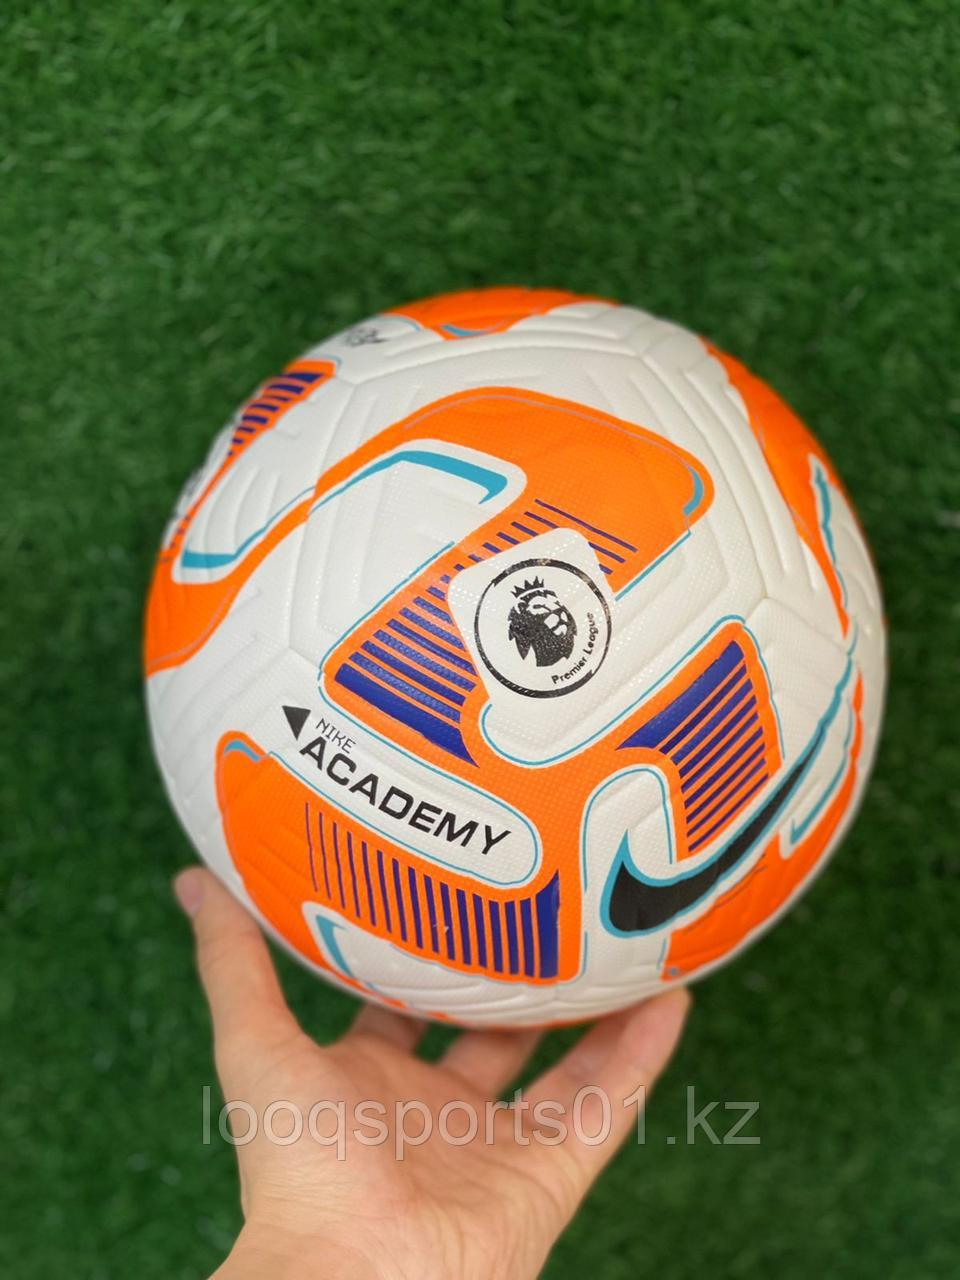 Футбольный мяч Nike размер 5